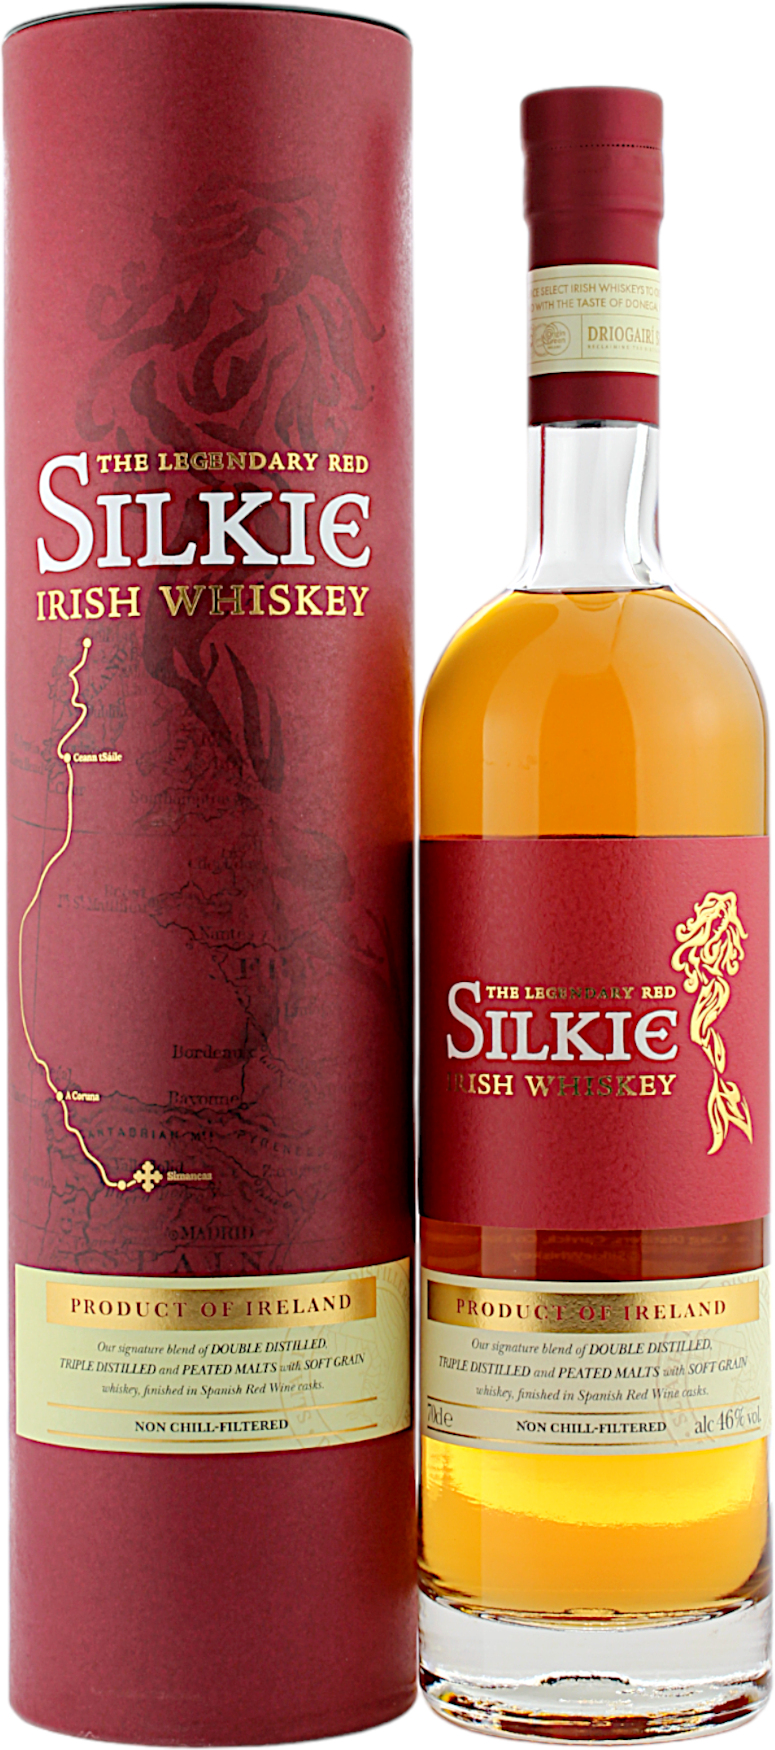 Silkie The Legendary Red Irish Whiskey 46.0% 0,7l